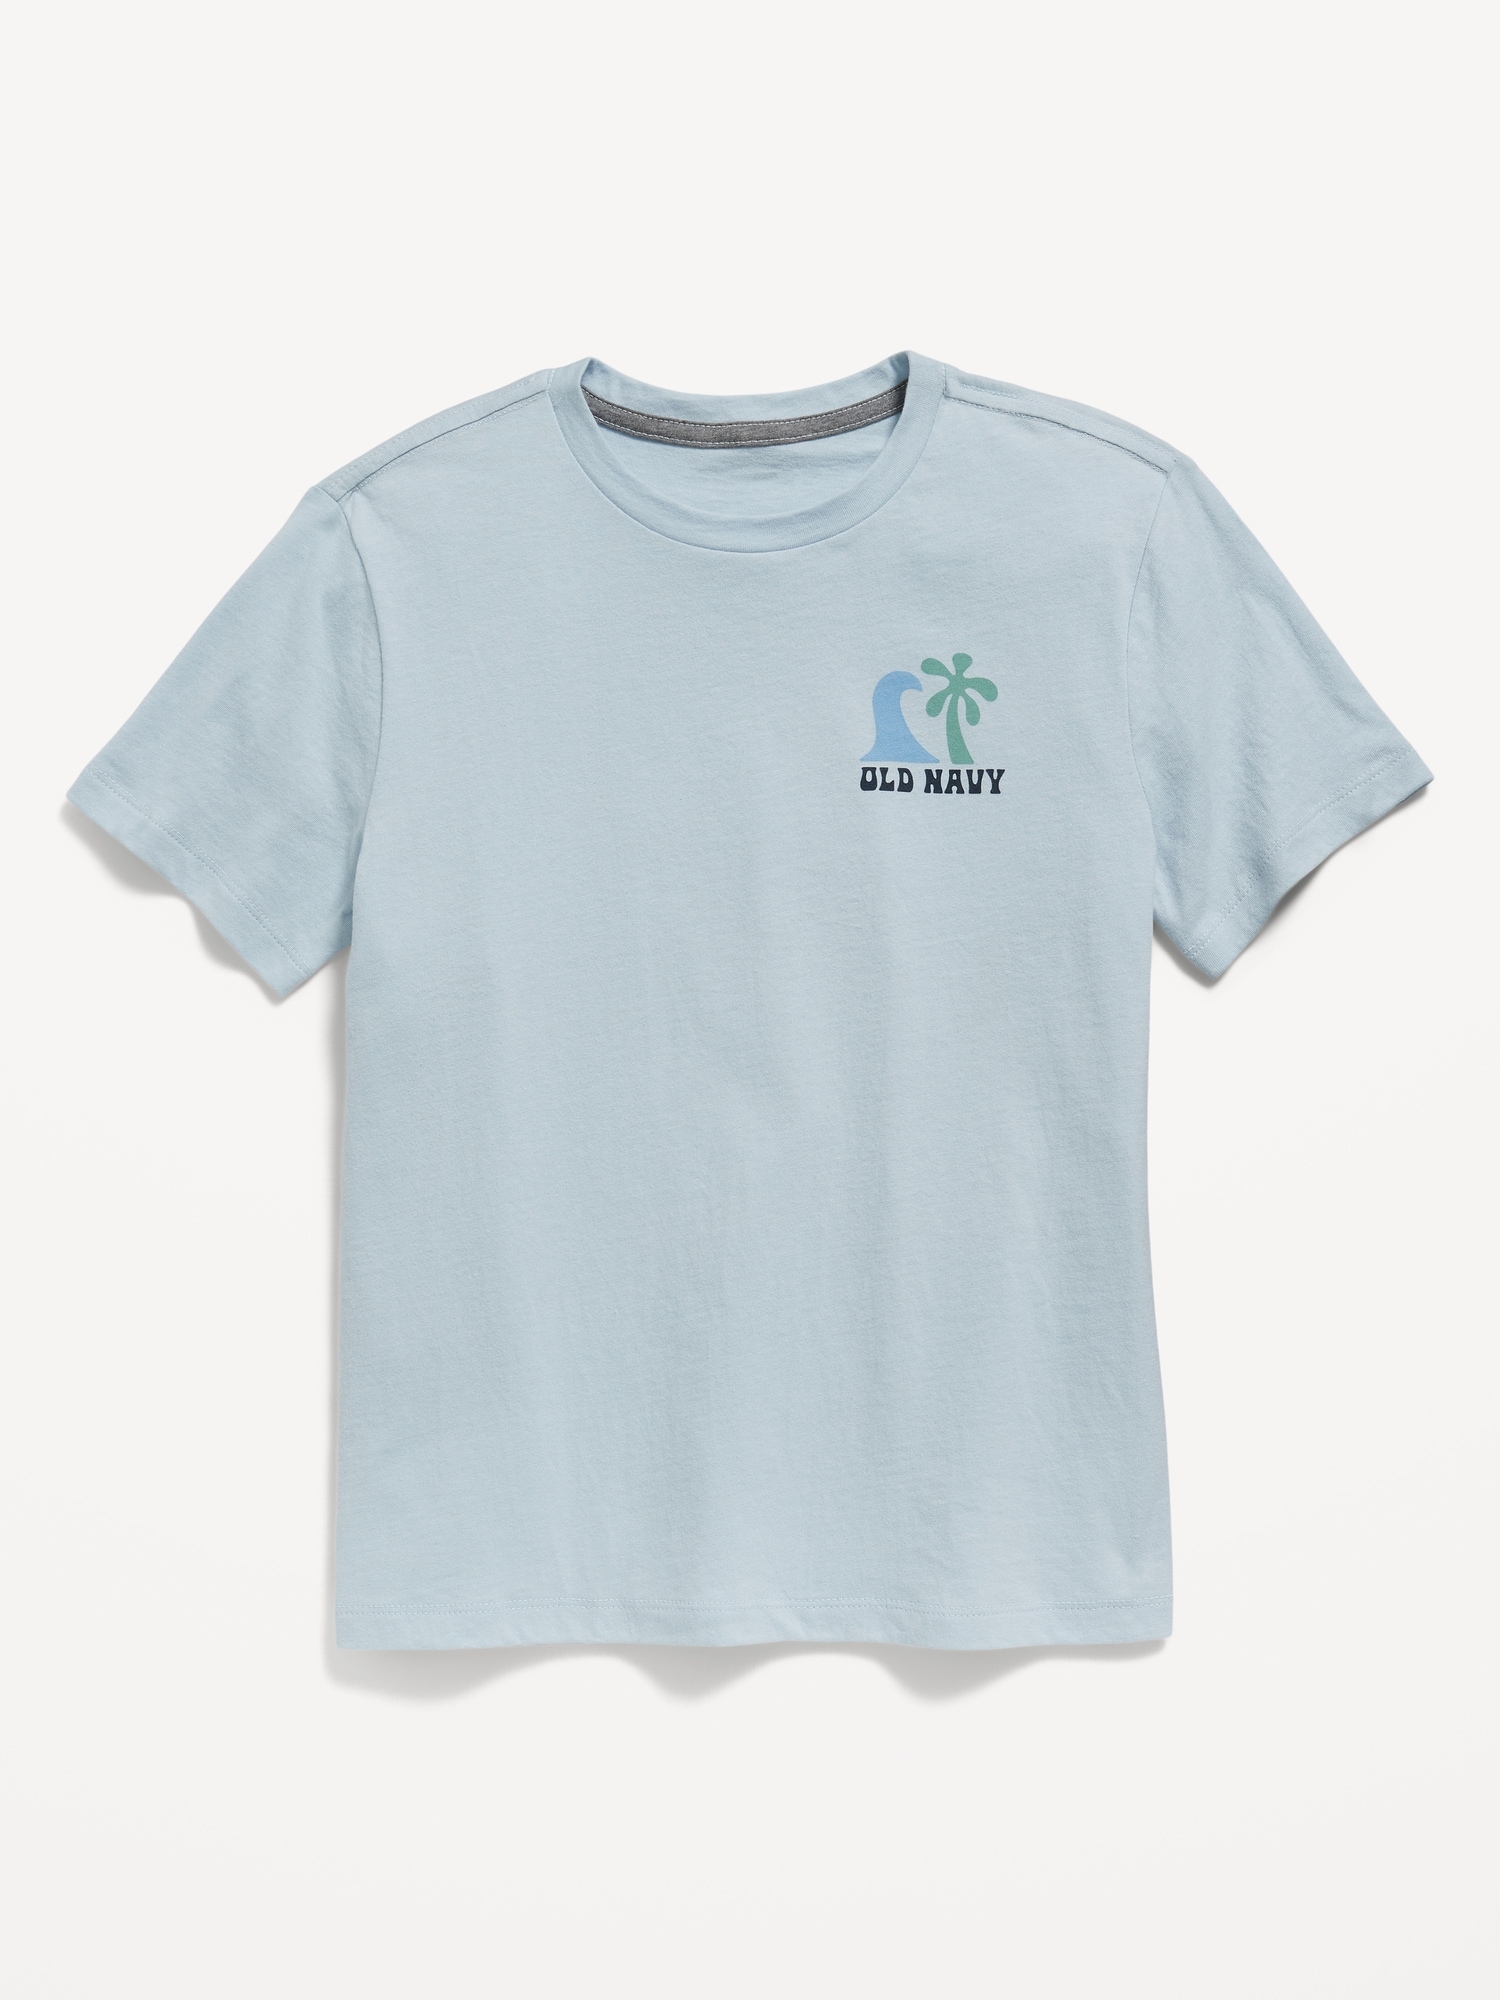 Short-Sleeve Logo-Graphic T-Shirt for Boys Hot Deal